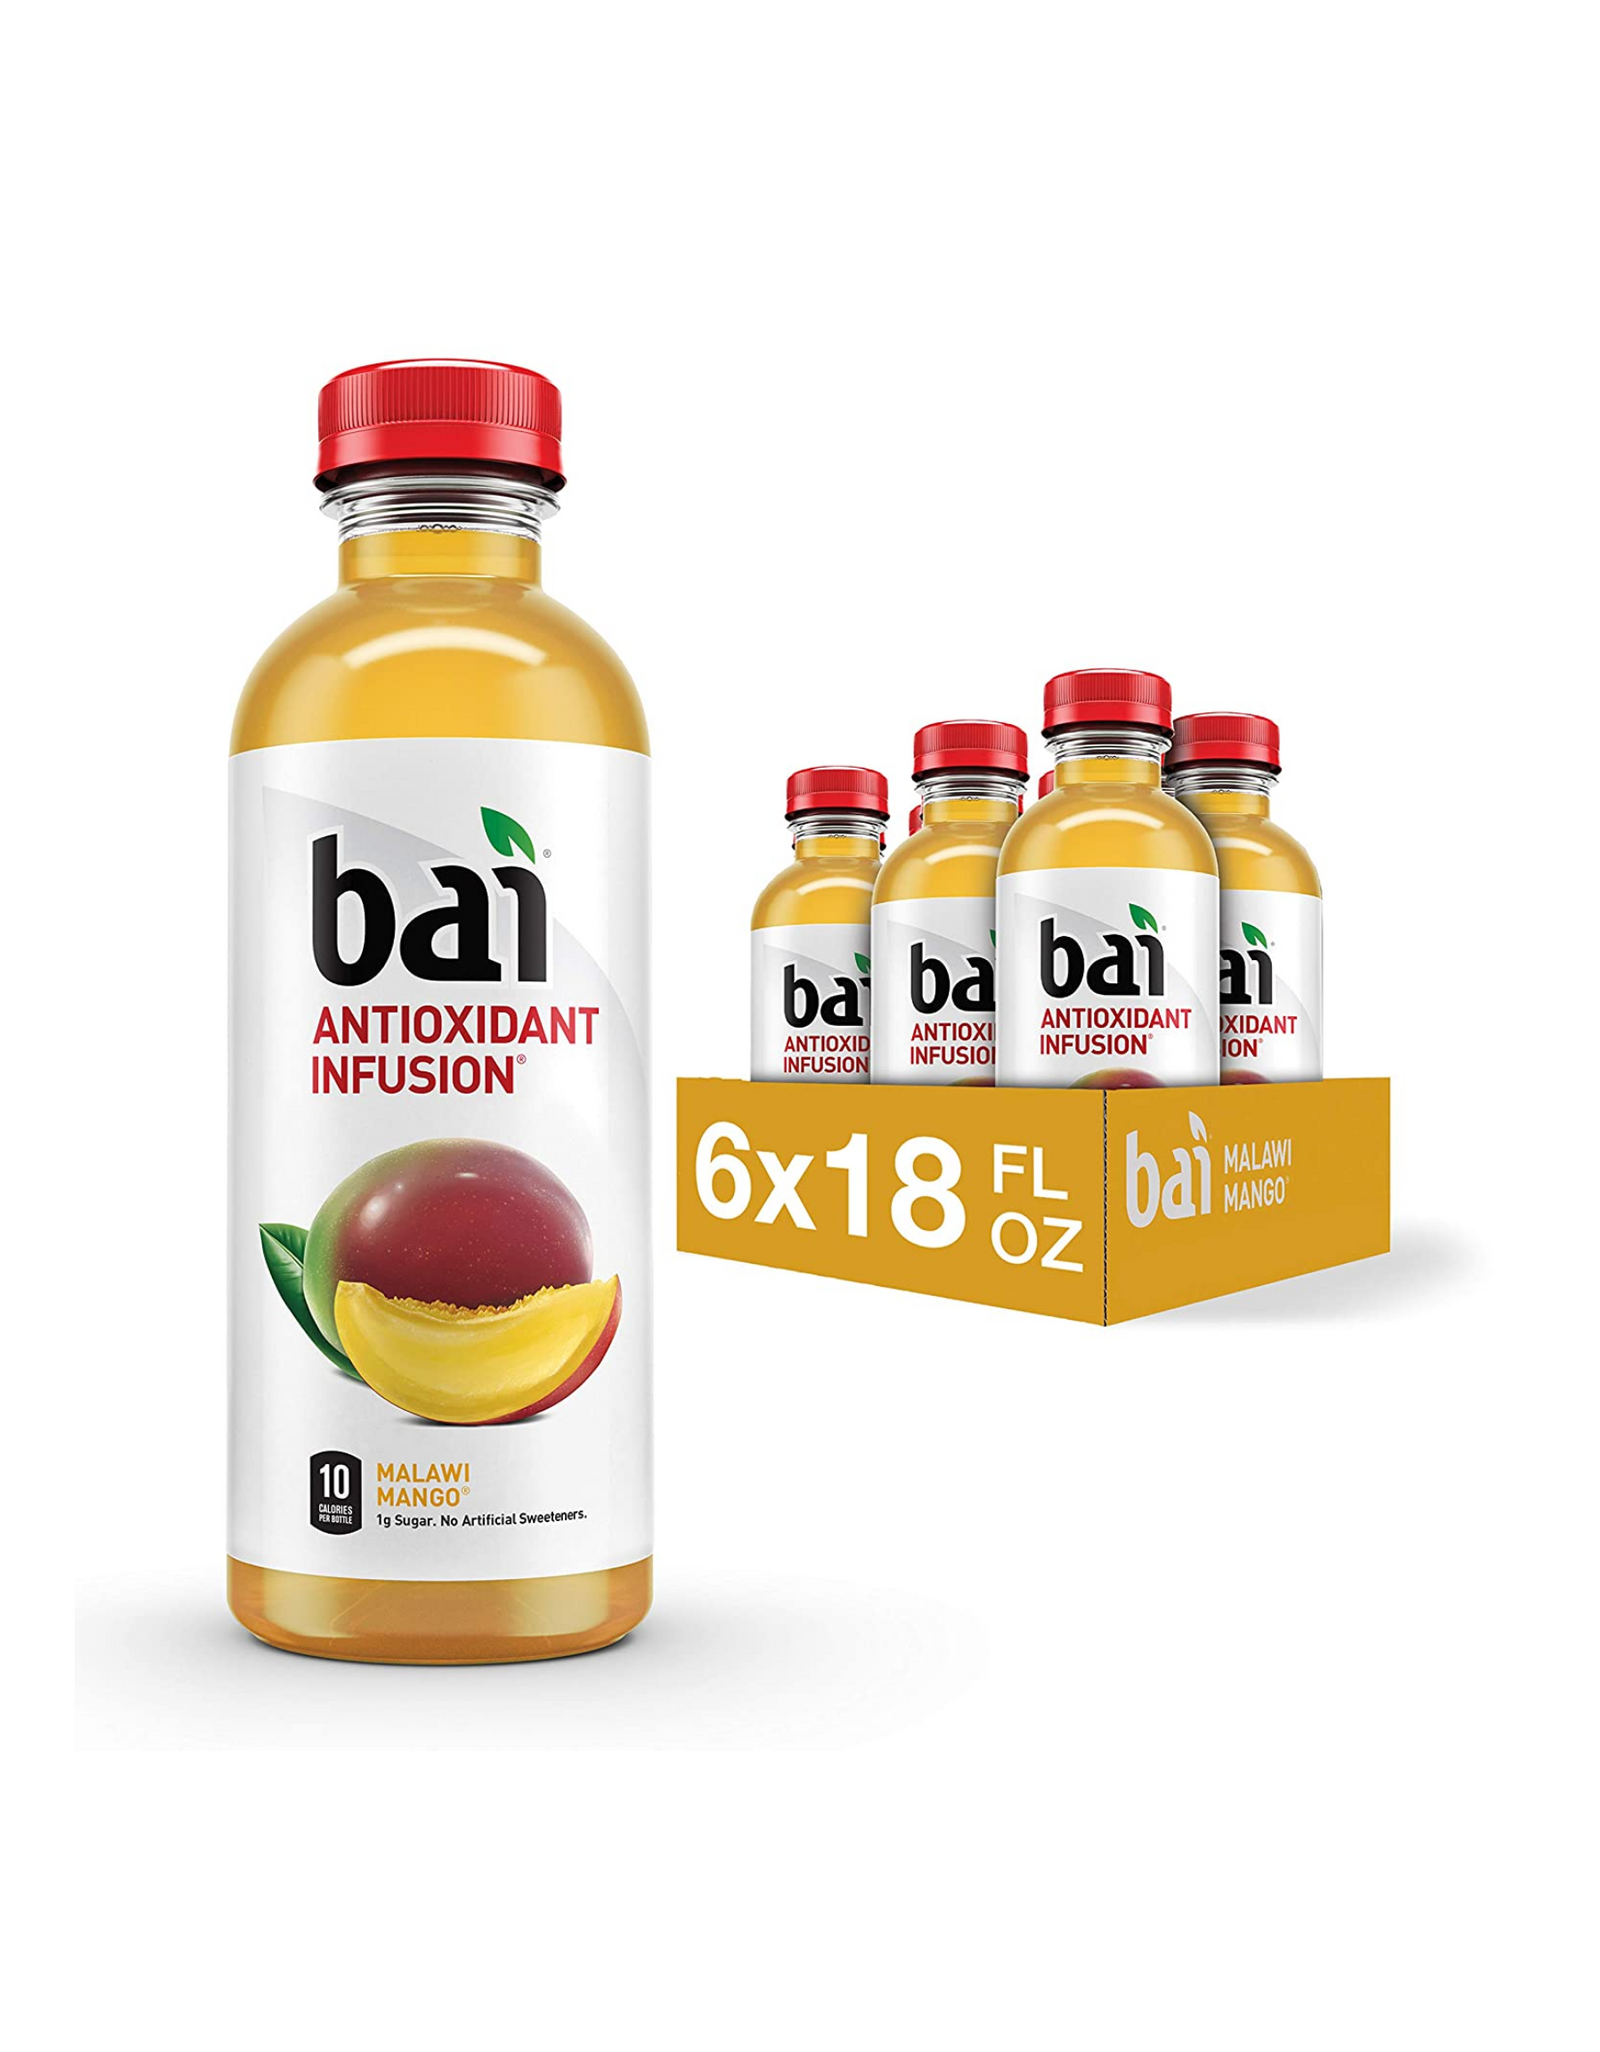 Bai Flavored Water, Malawi Mango, Antioxidant Infusion Drinks, 18 fl oz (Pack of 6)